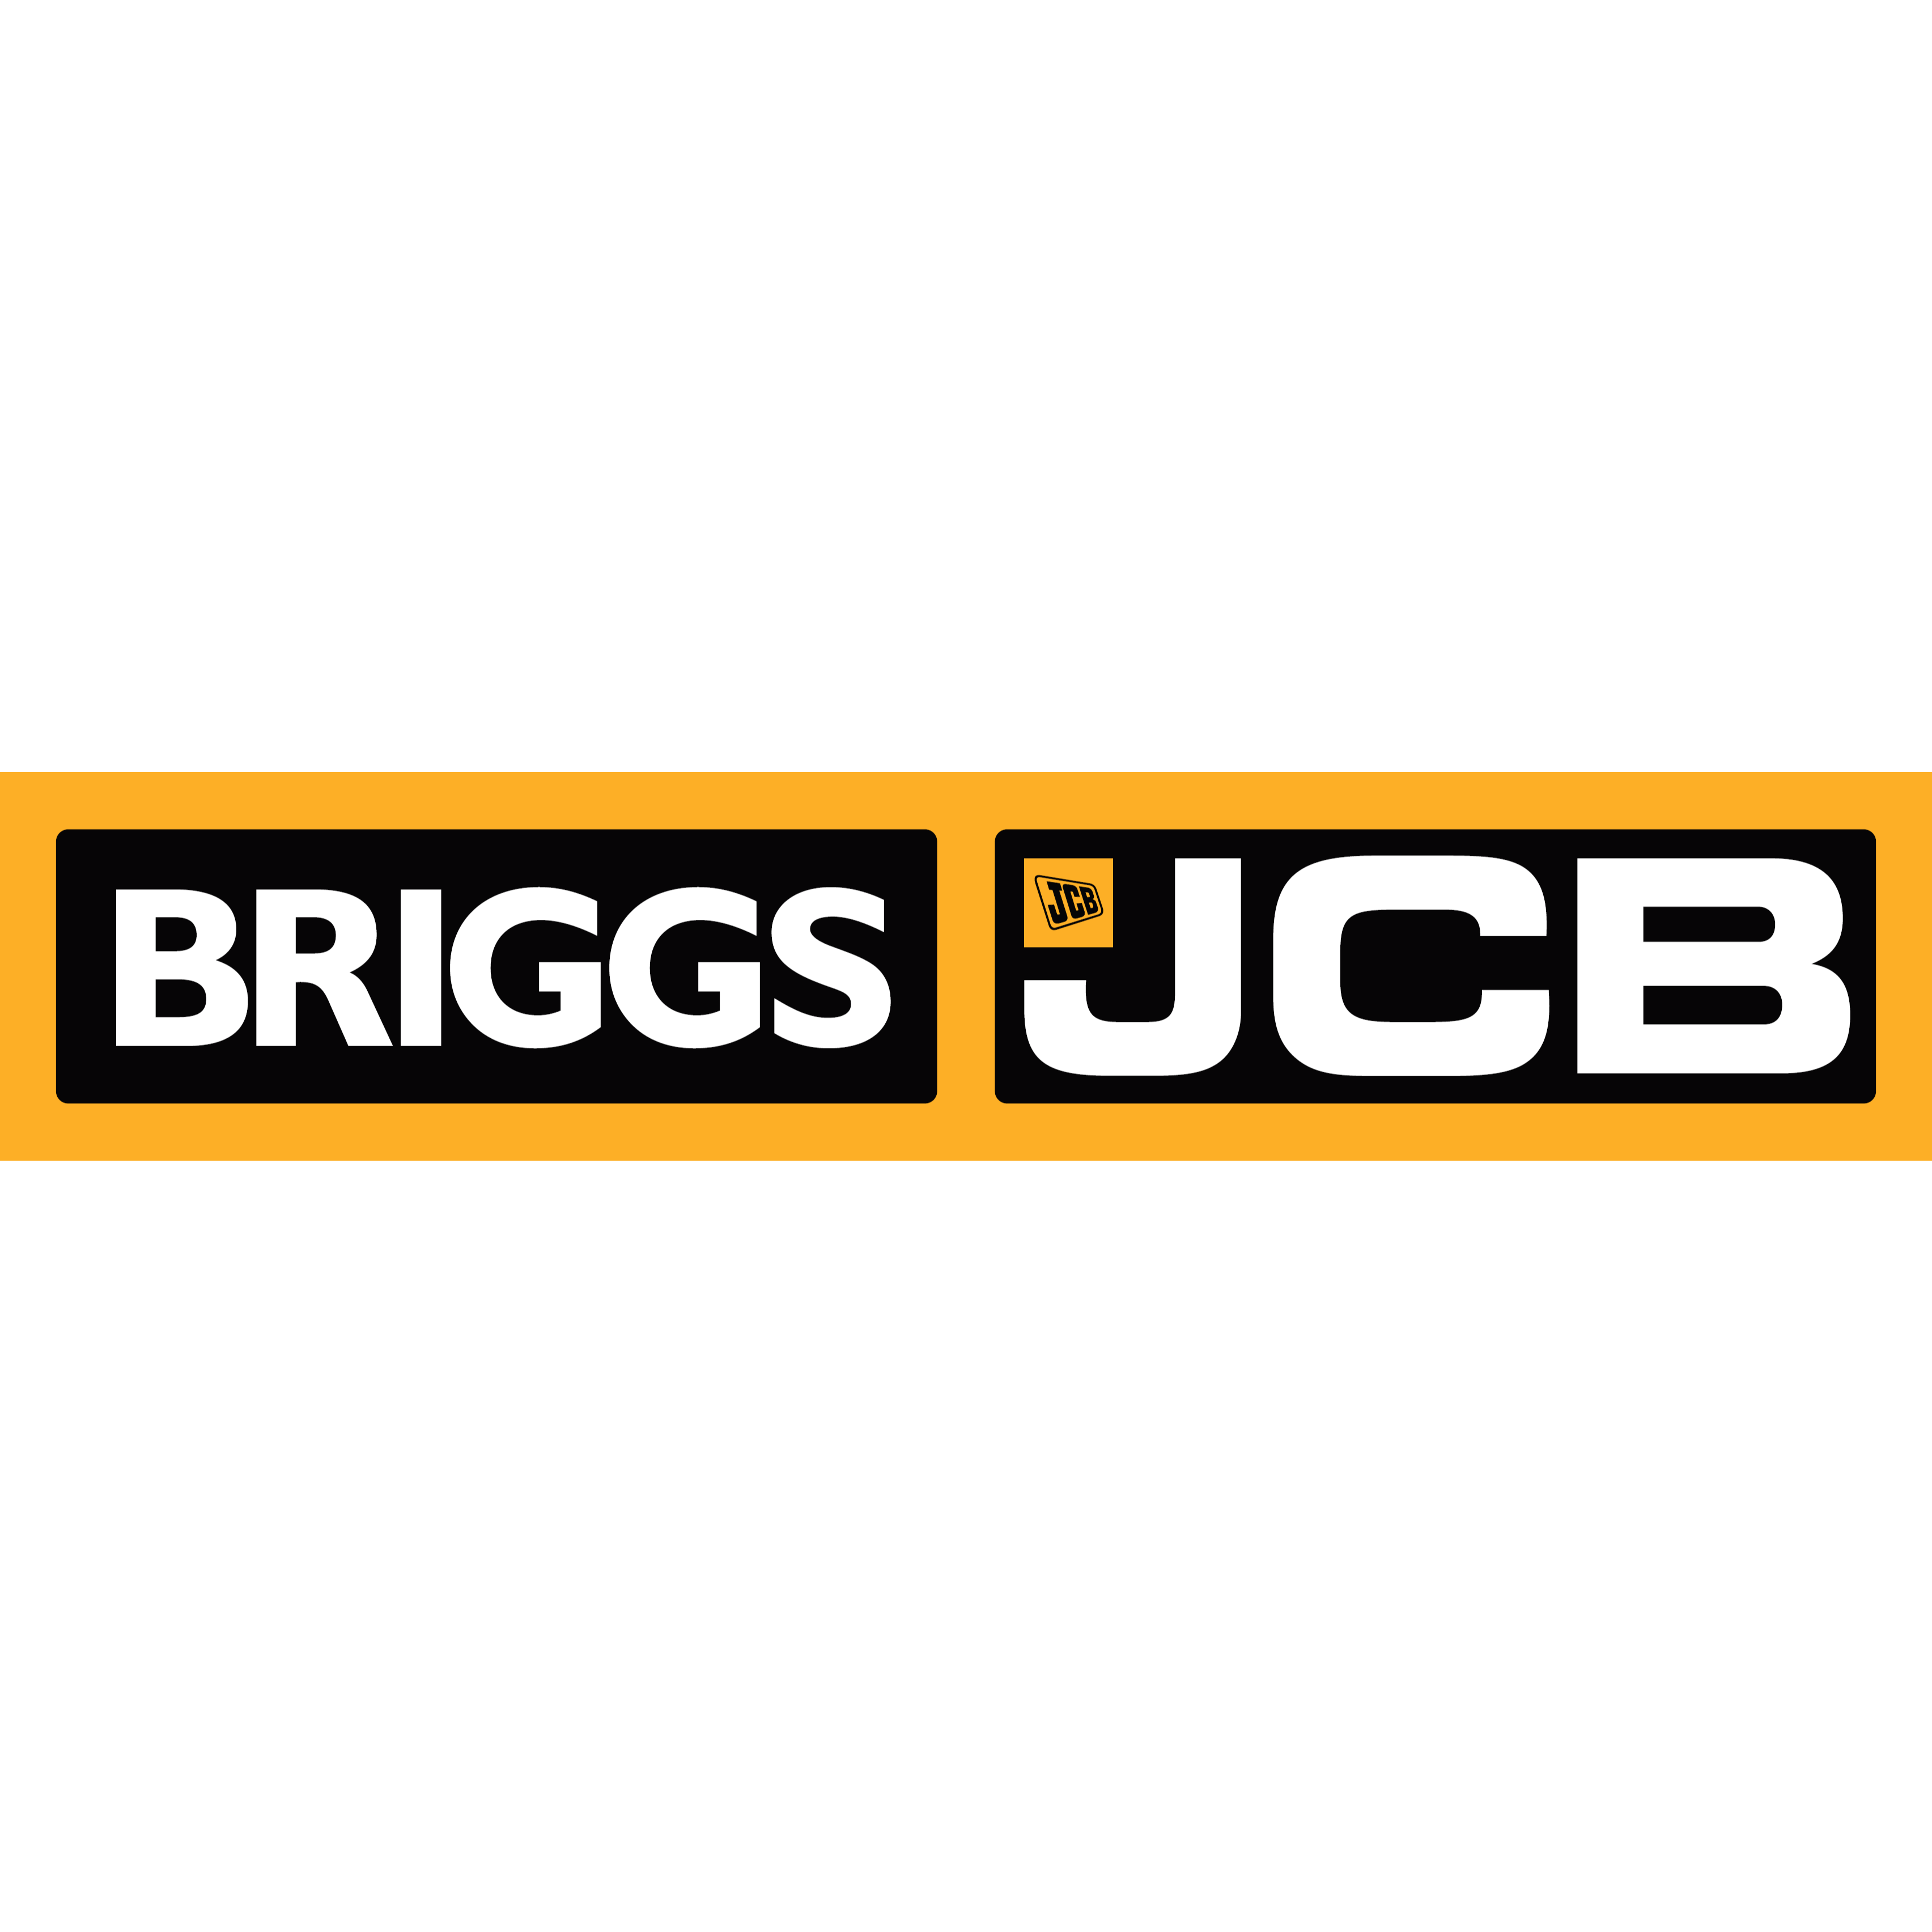 Briggs JCB Logo